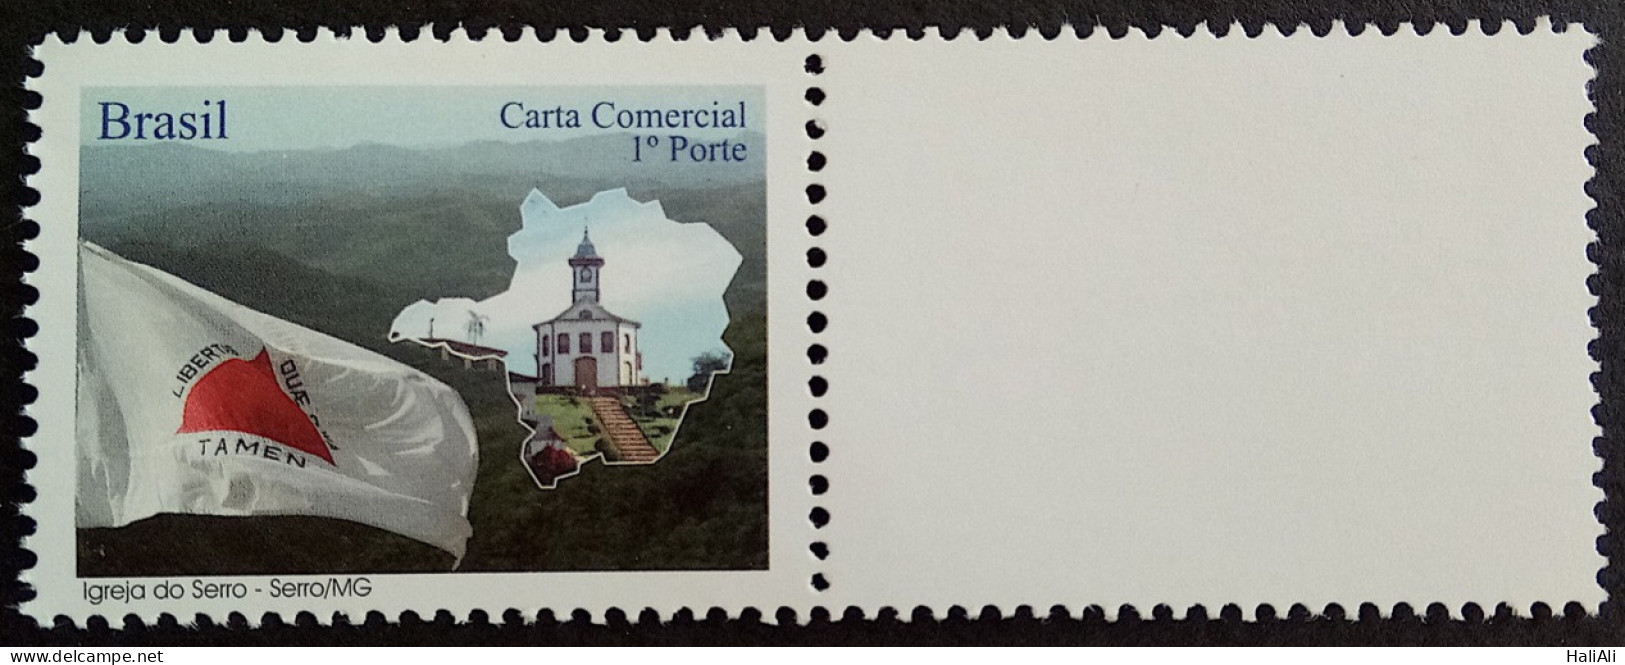 C 2855 Brazil Personalized Stamp Tourism Minas Gerais Church Of Serro Map Flag 2009 Horizontal Subtitle Vignette White - Personnalisés